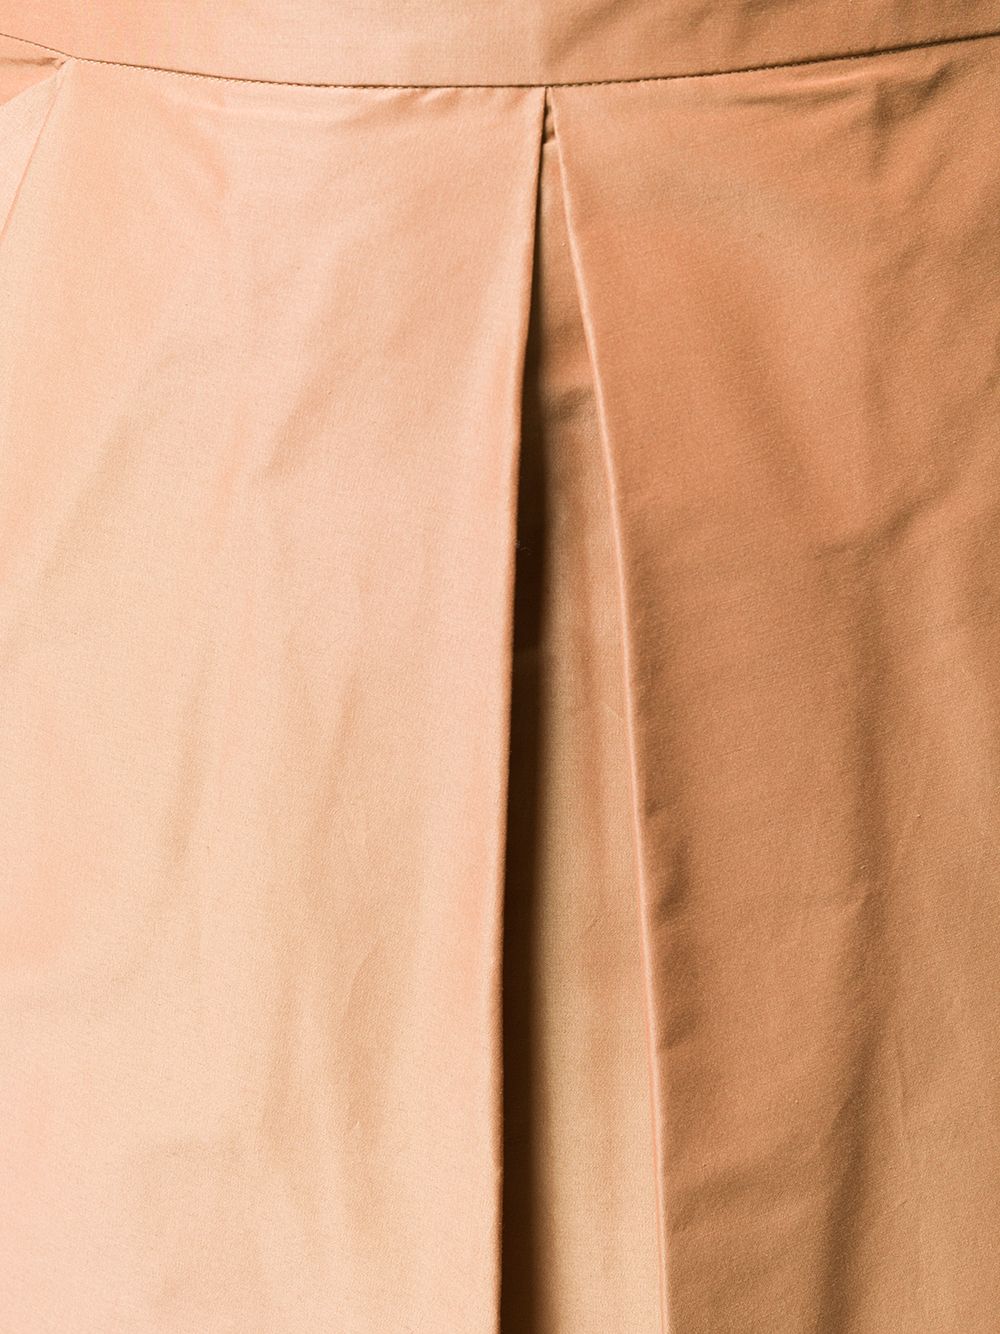 фото Gianfranco ferré pre-owned юбка 1990-х годов со складками